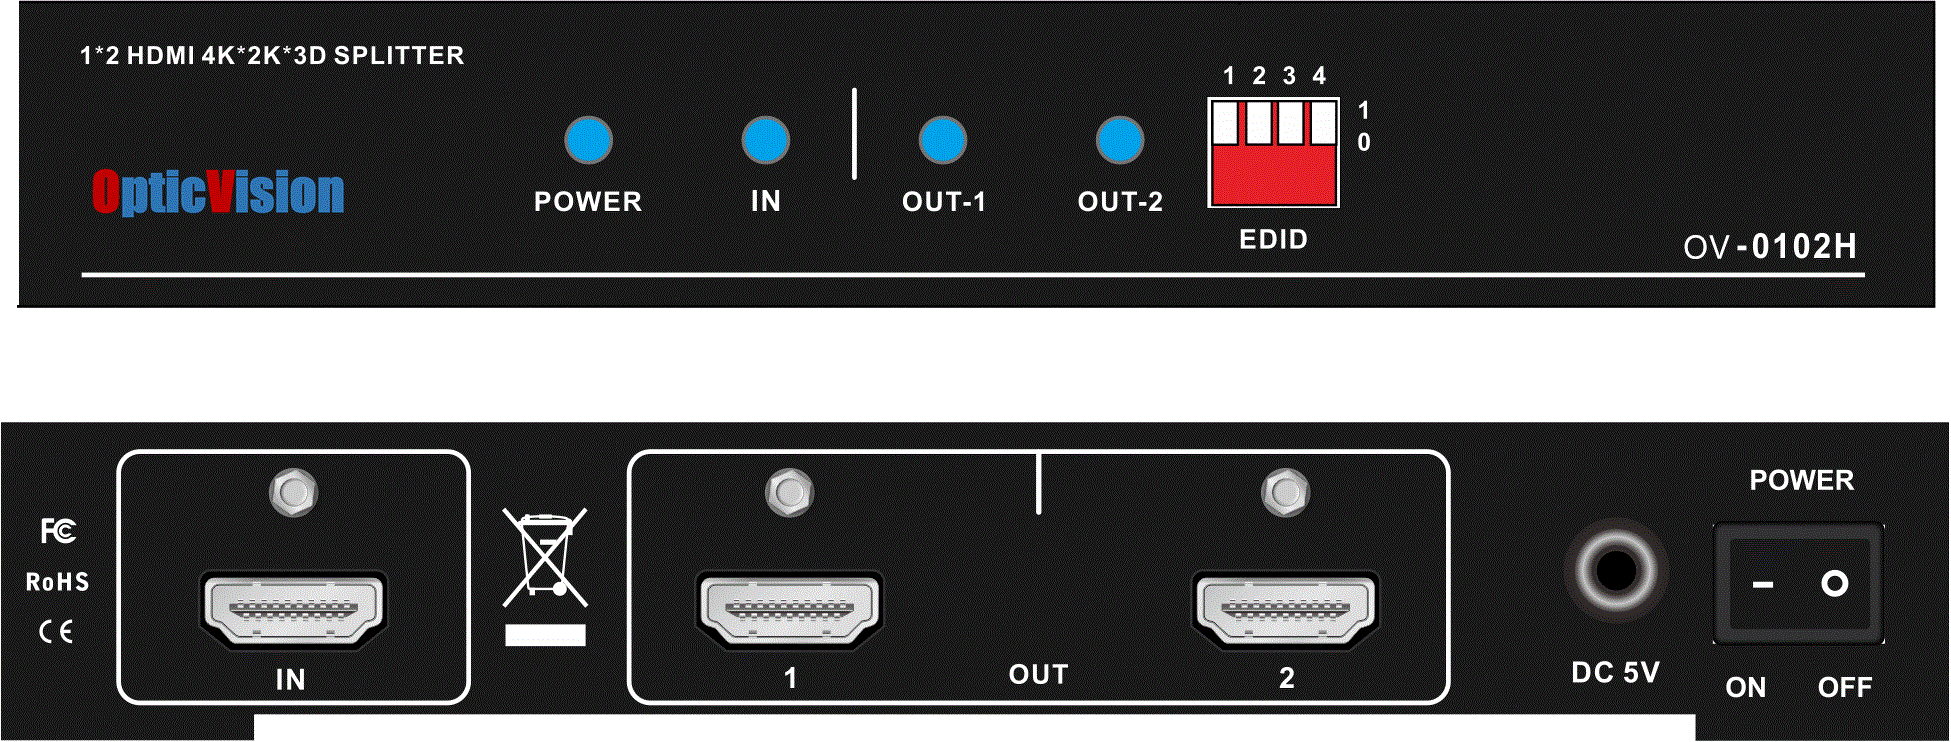 OV-0102H是一款高清HDMI分配器